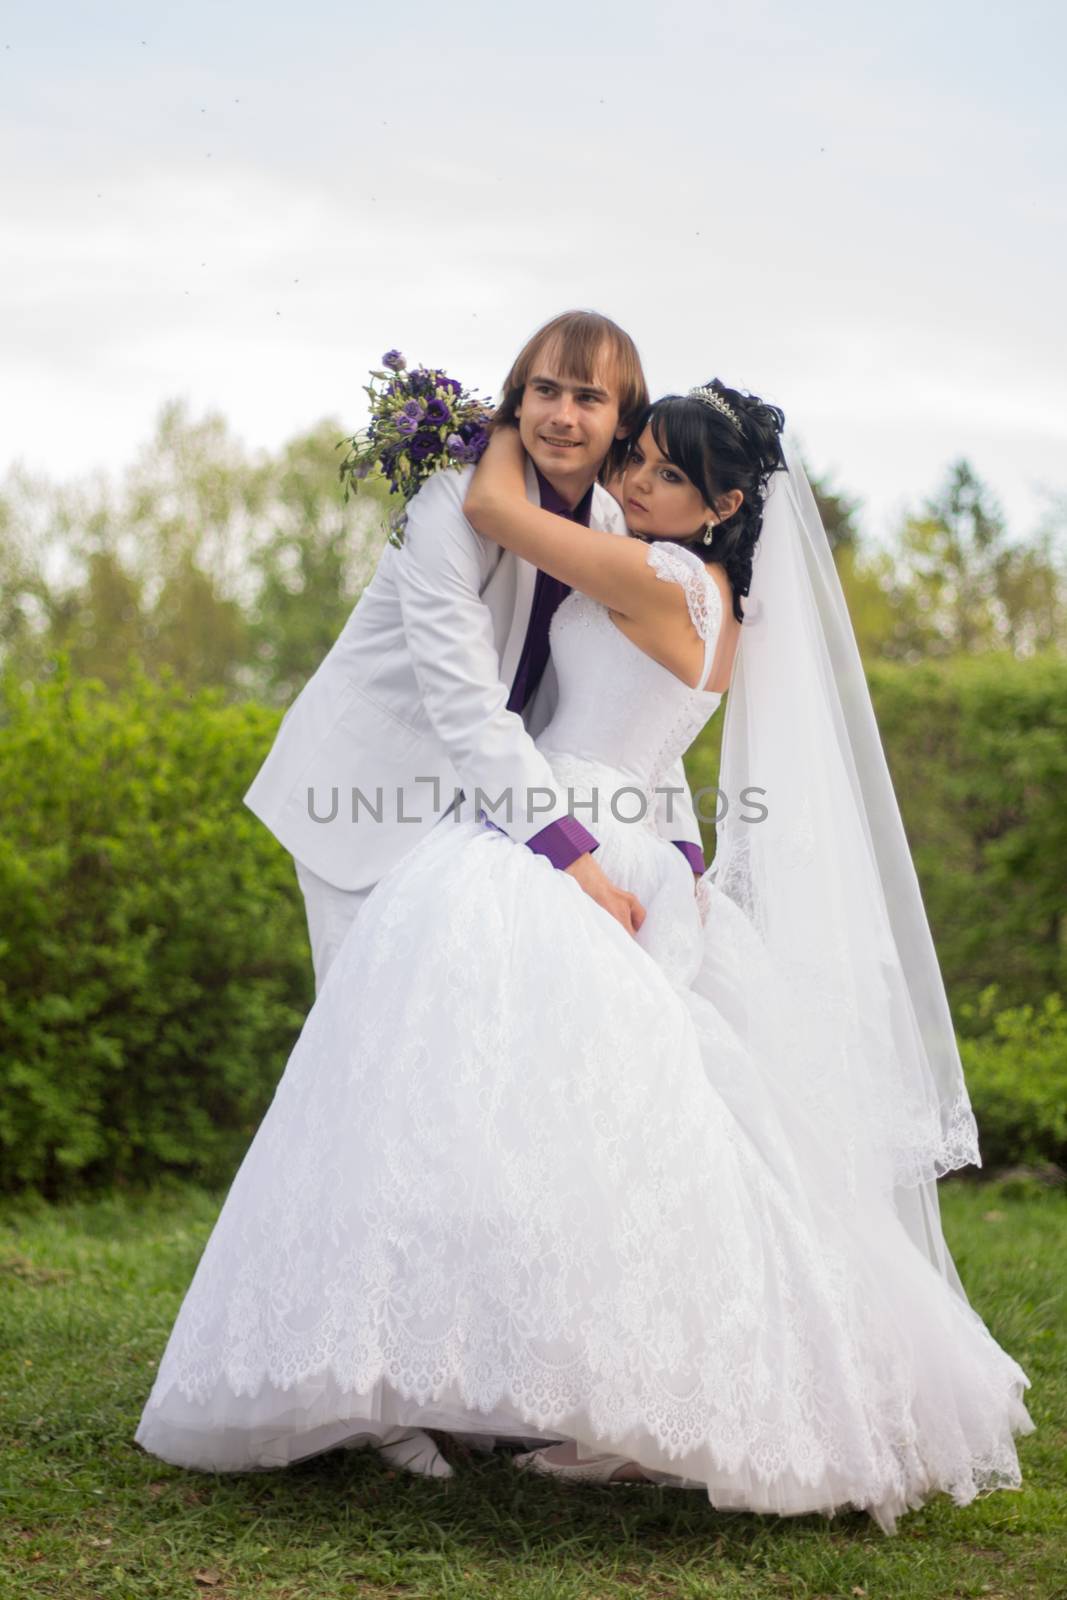 Groom and Bride a park. dress. Bridal wedding bouquet by serhii_lohvyniuk